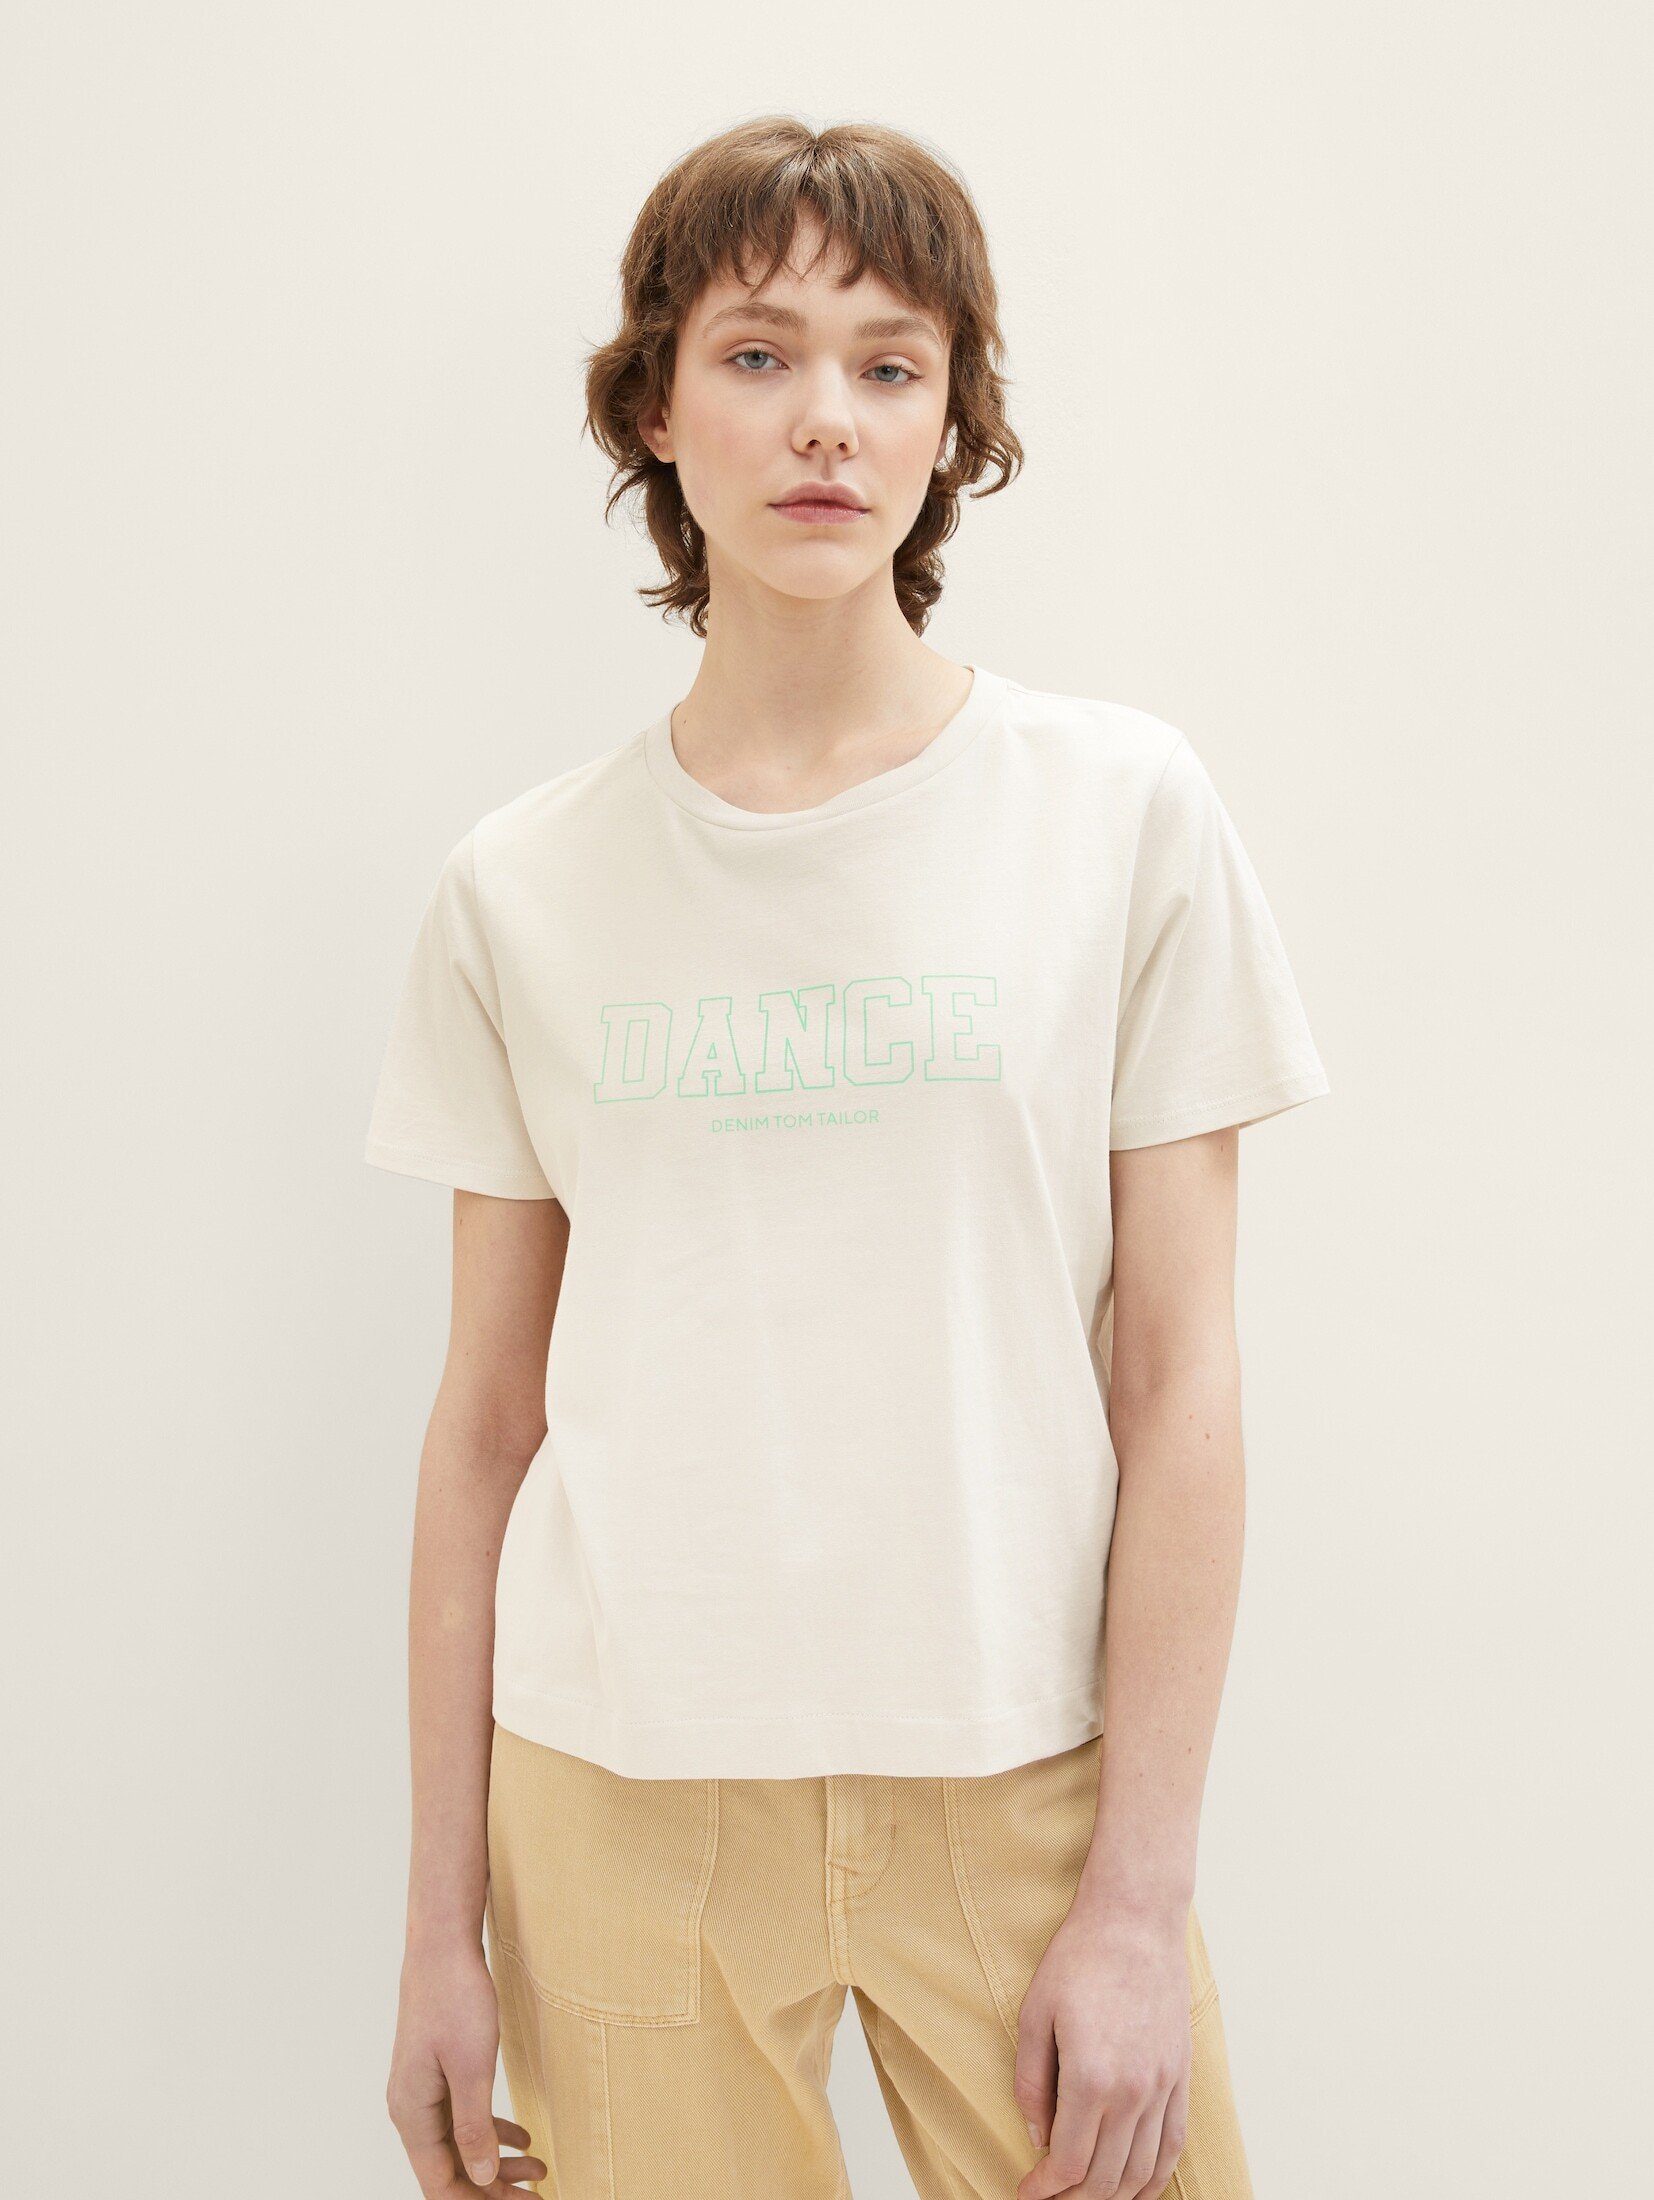 TOM T-Shirt mit Langarmshirt Textprint Denim TAILOR